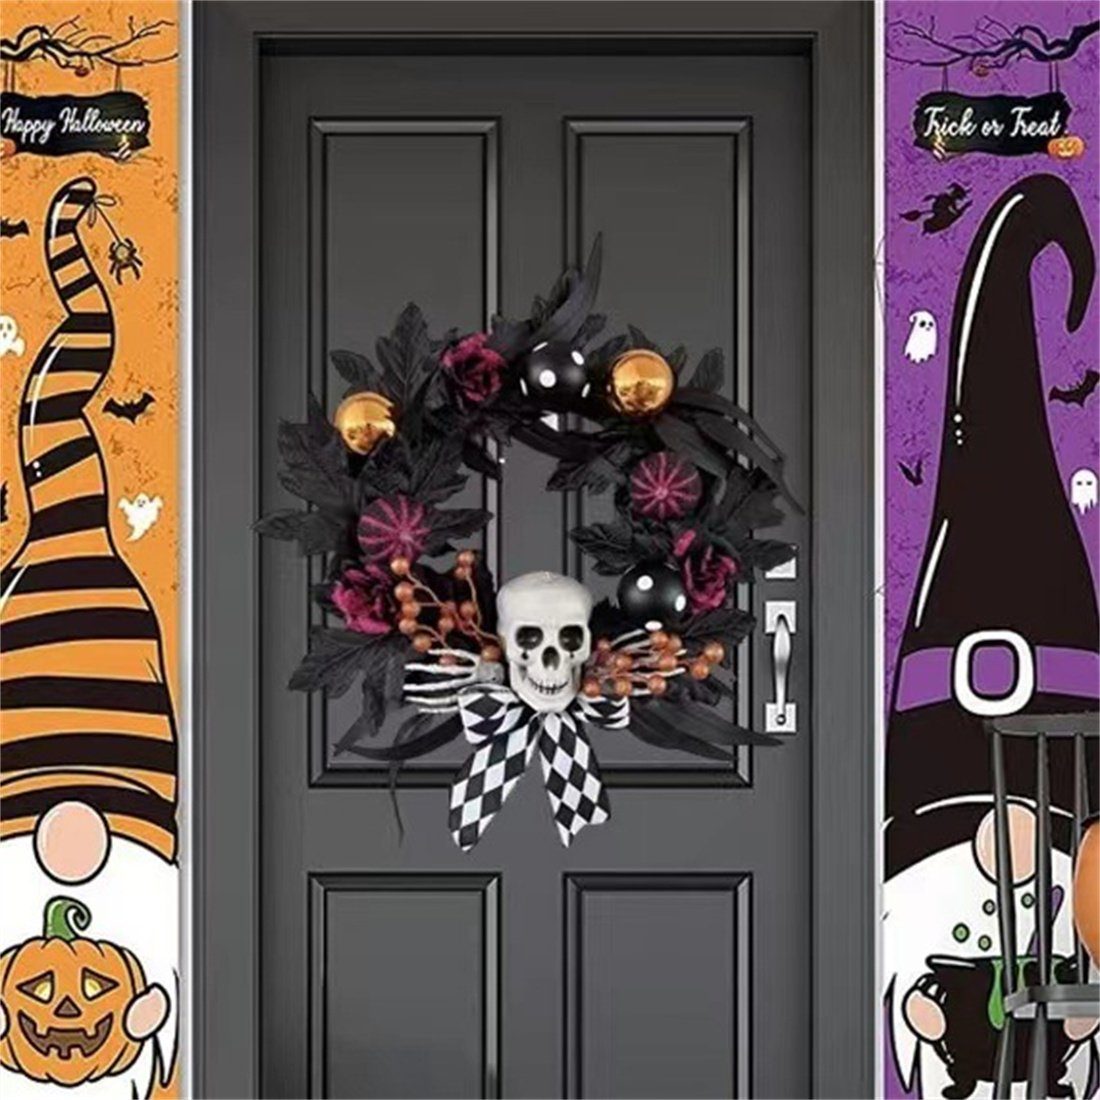 Dekoration Kunstgirlande Tür Girlande, Aufhängen, Totenkopf Halloween Gruselige Party DÖRÖY